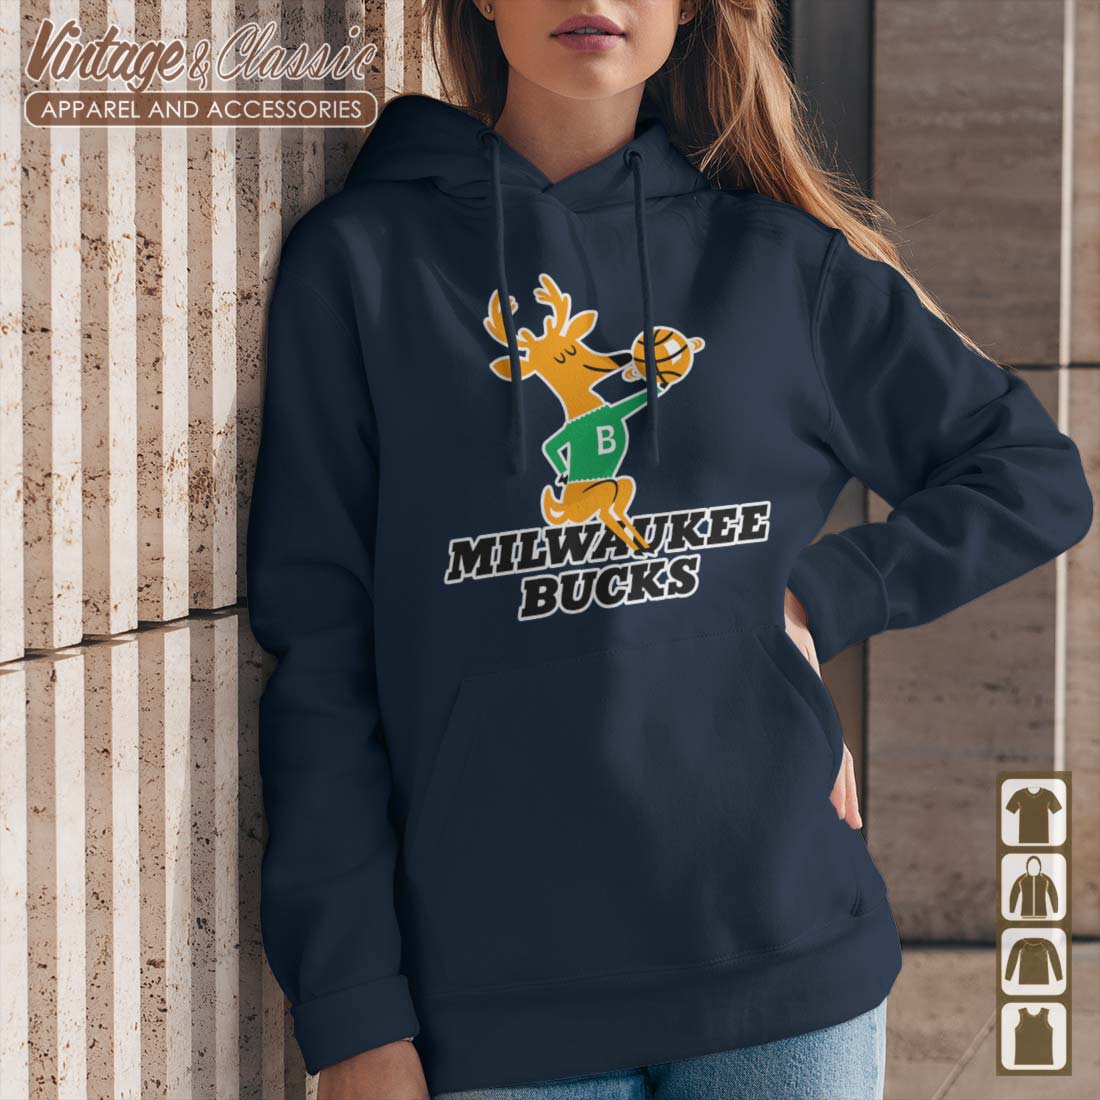 Milwaukee Buck Vintage Milwaukee Buck Sweatshirt T-shirt 